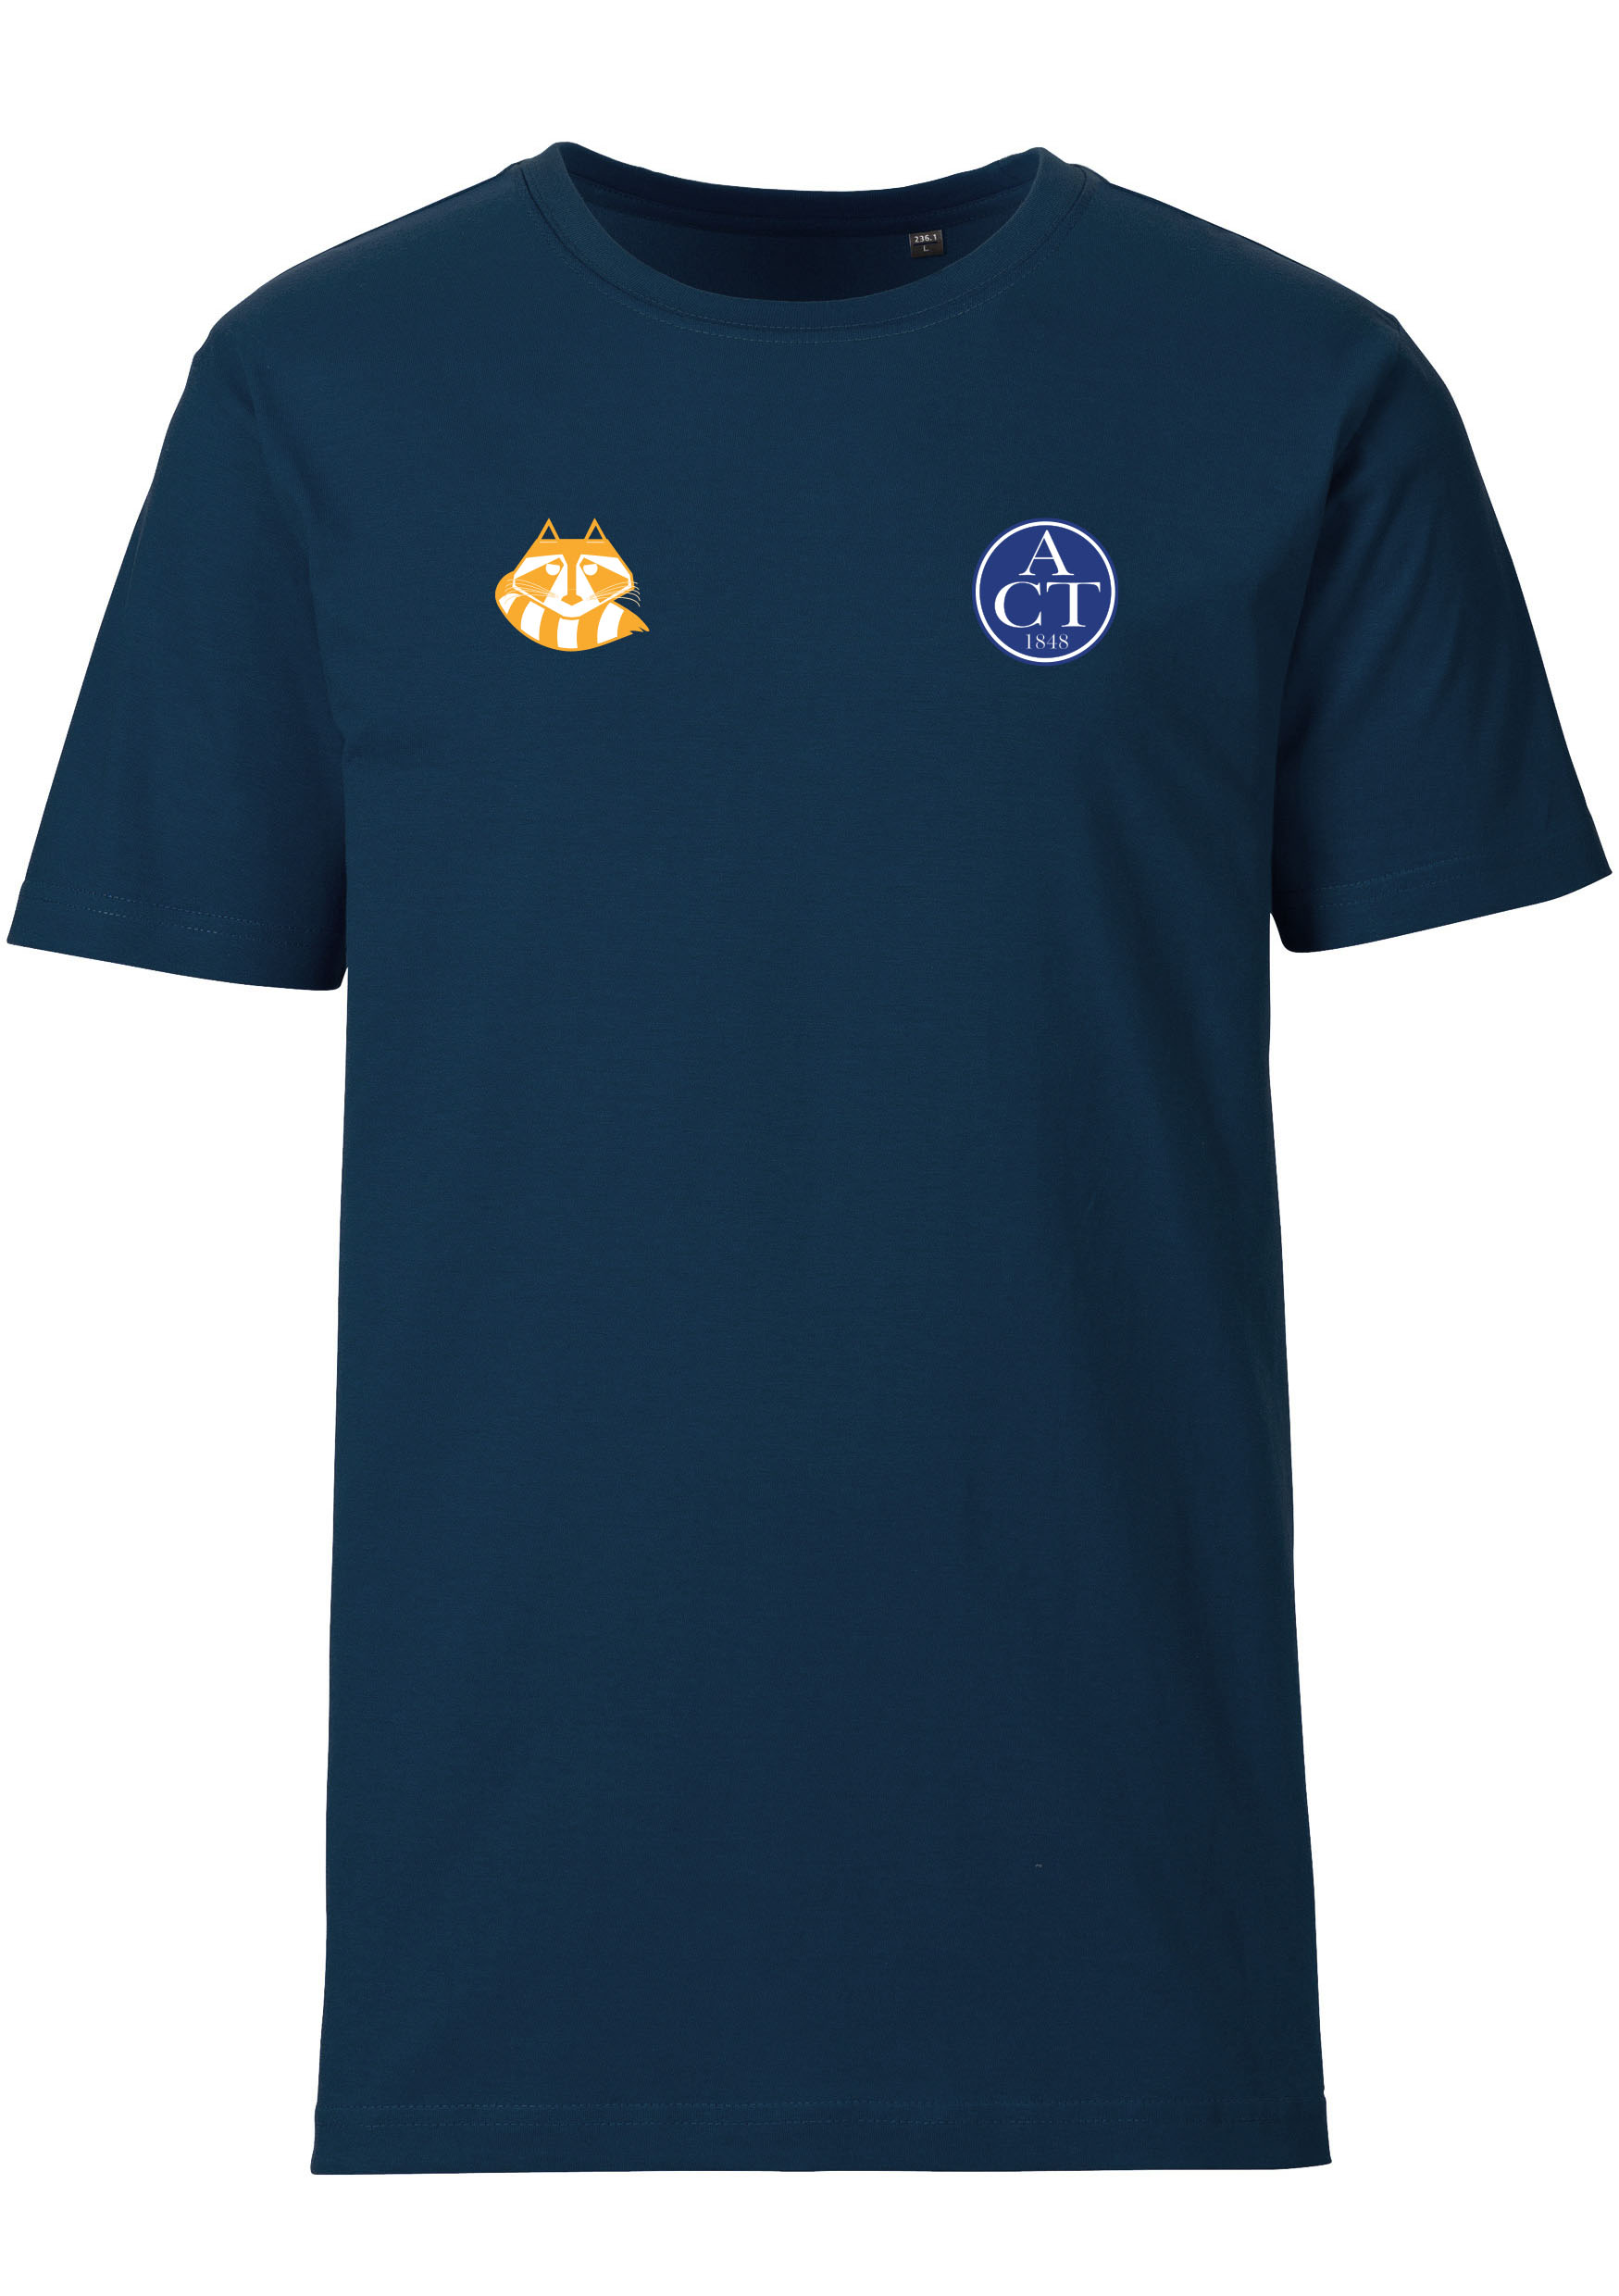 ACT Triathlon T-Shirt navy